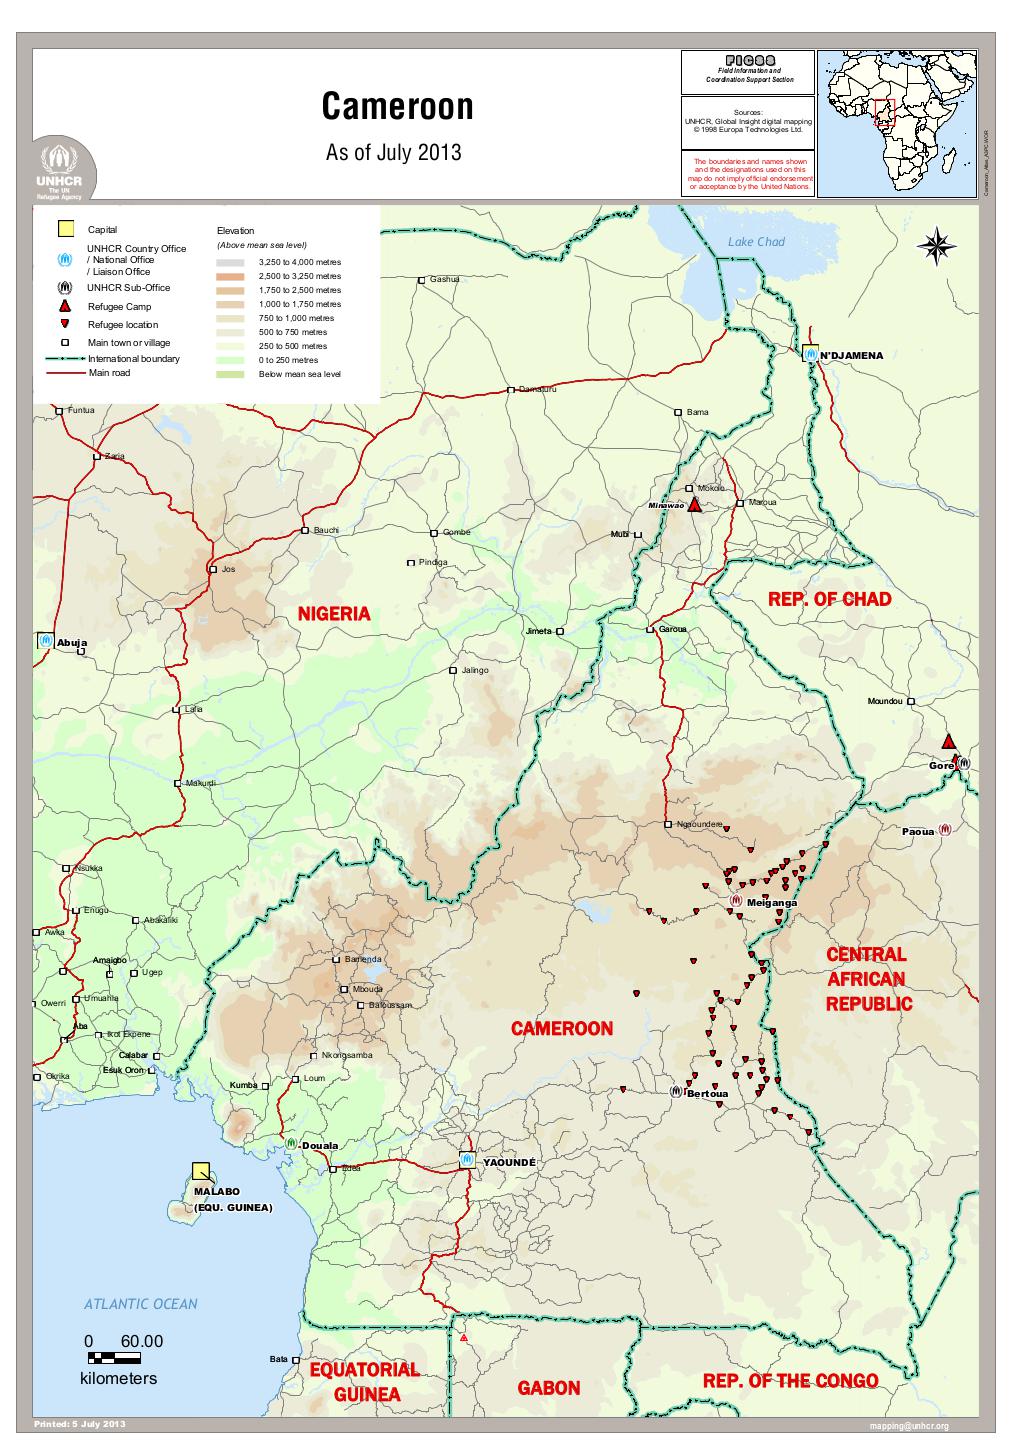 Big Cameroon Atlas A3PC 05 07 2013.pdfthumb 